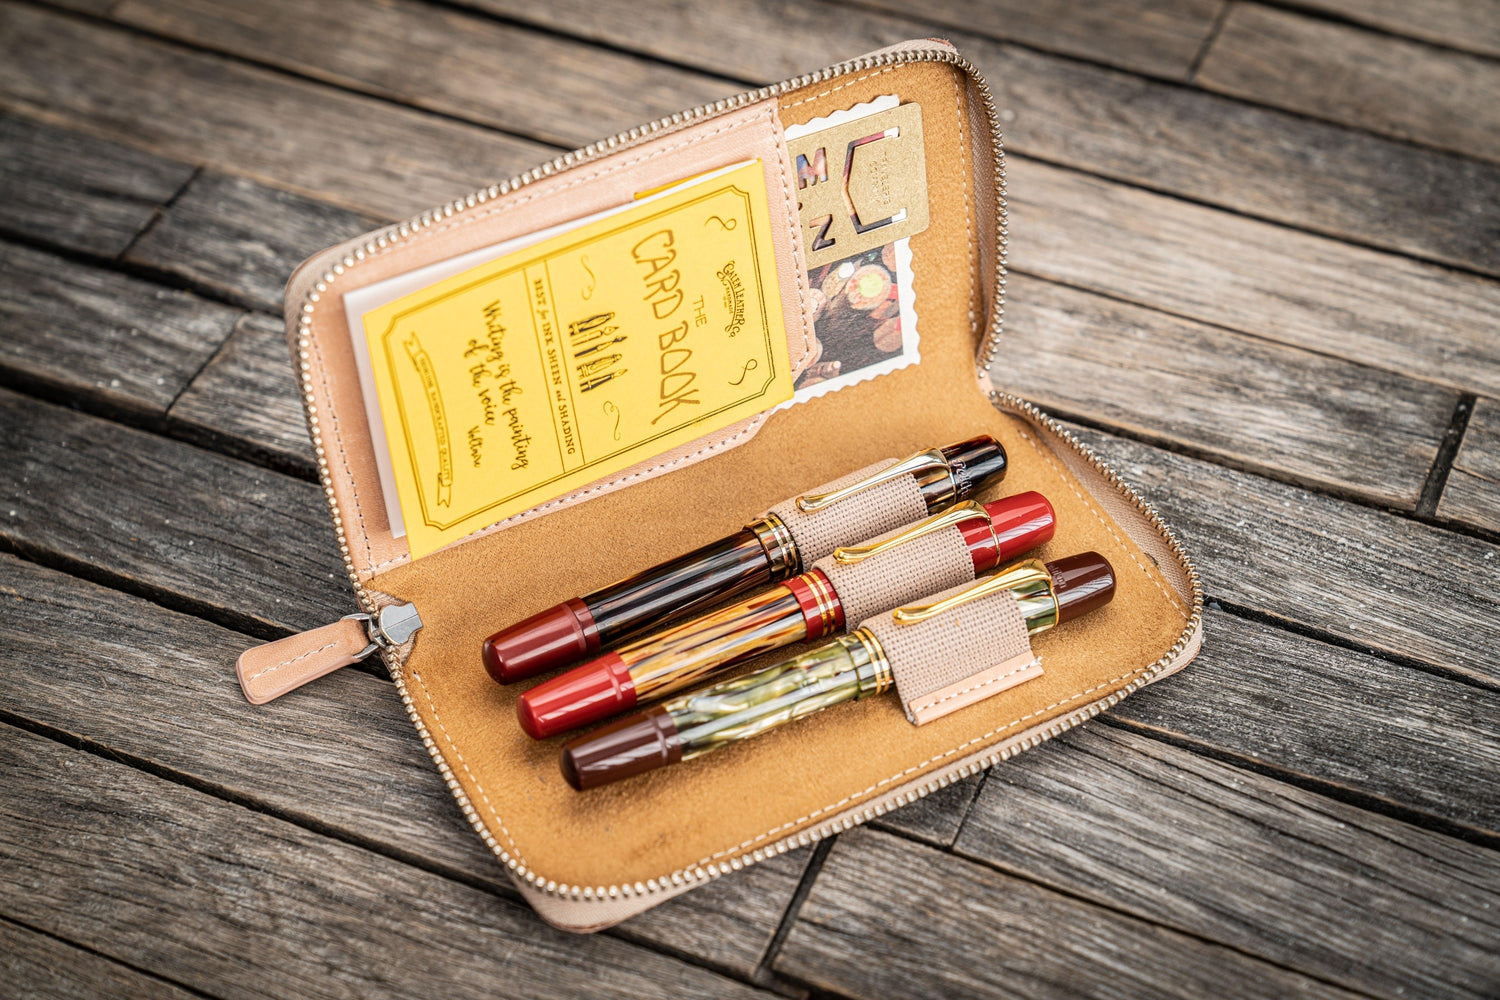 Leather Flap Pen Cases - Handmade in Turkey - Buy Online Galen Leather